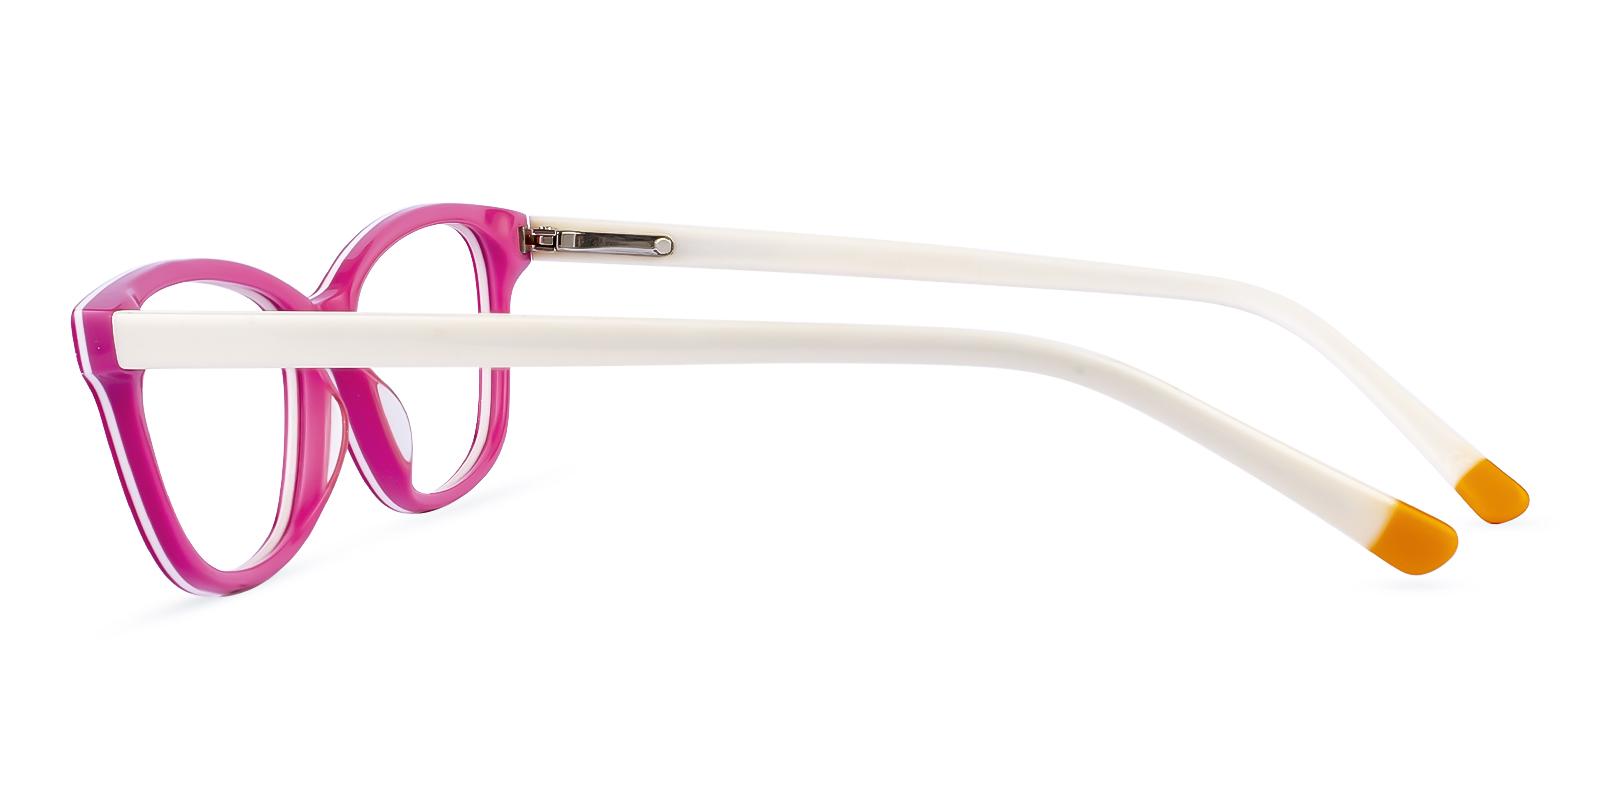 Levant Pink Acetate Eyeglasses , UniversalBridgeFit , SpringHinges Frames from ABBE Glasses